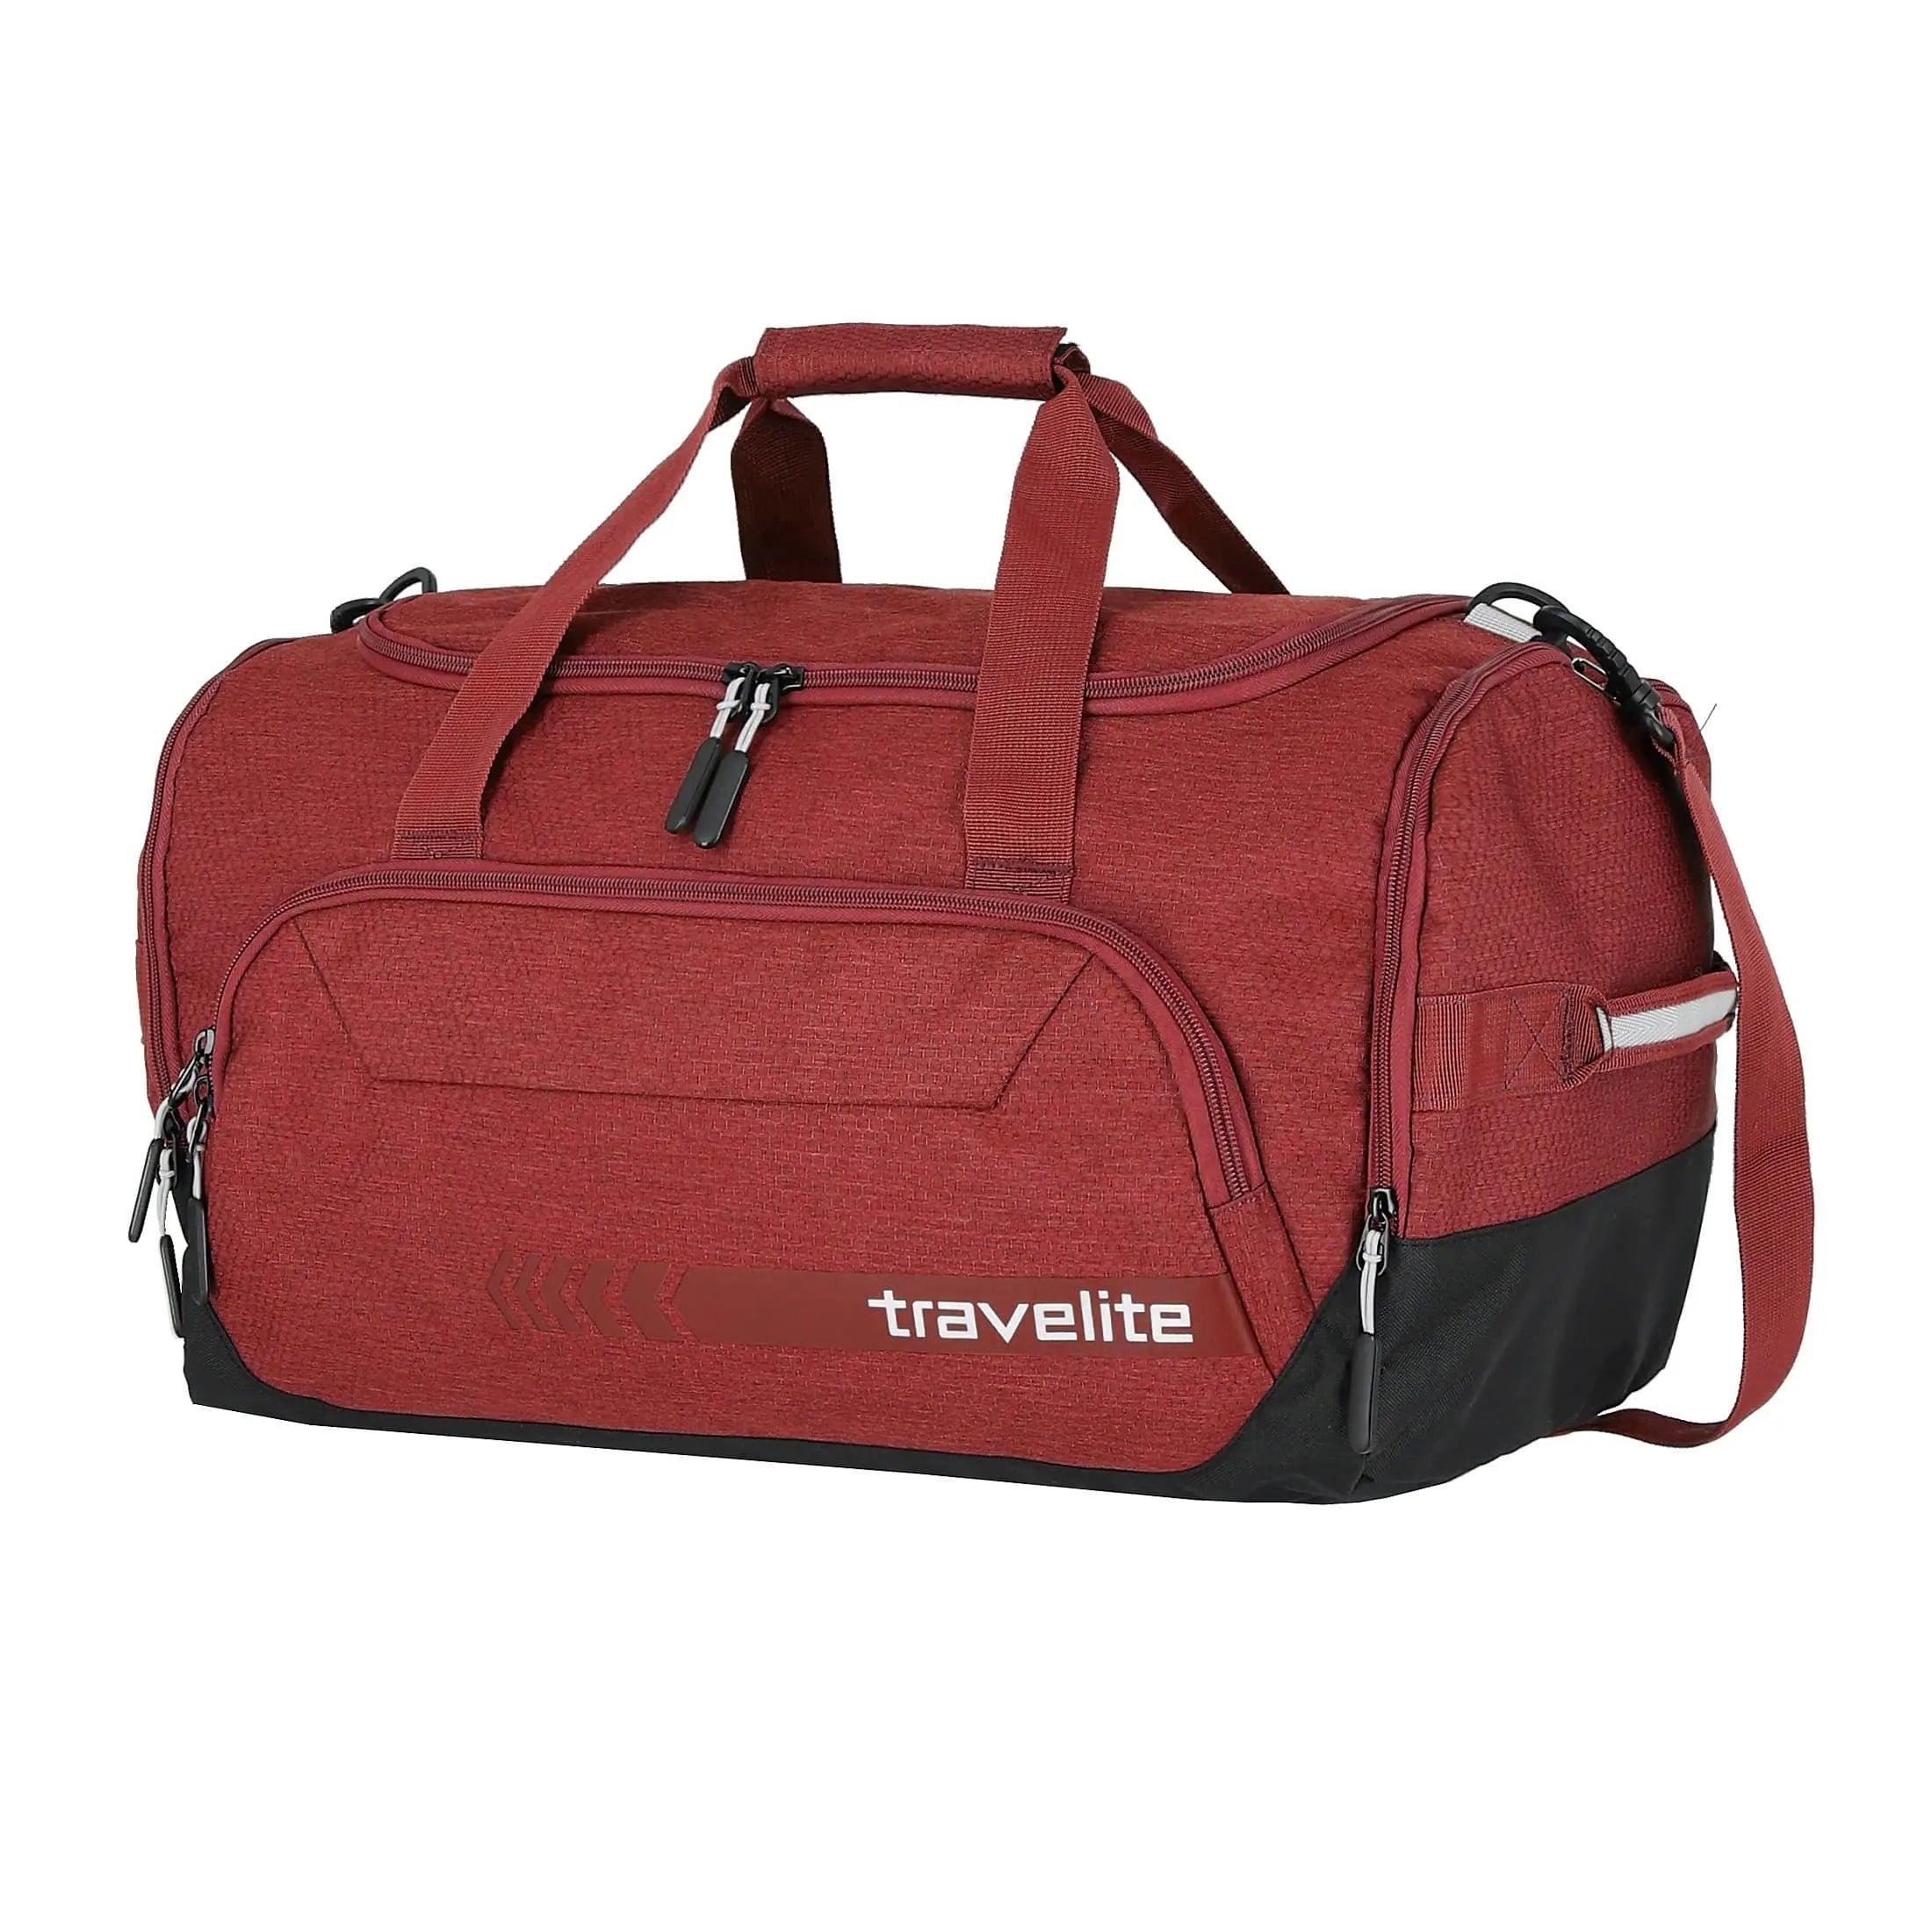 Travelite Kick Off travel bag 50 cm - anthracite